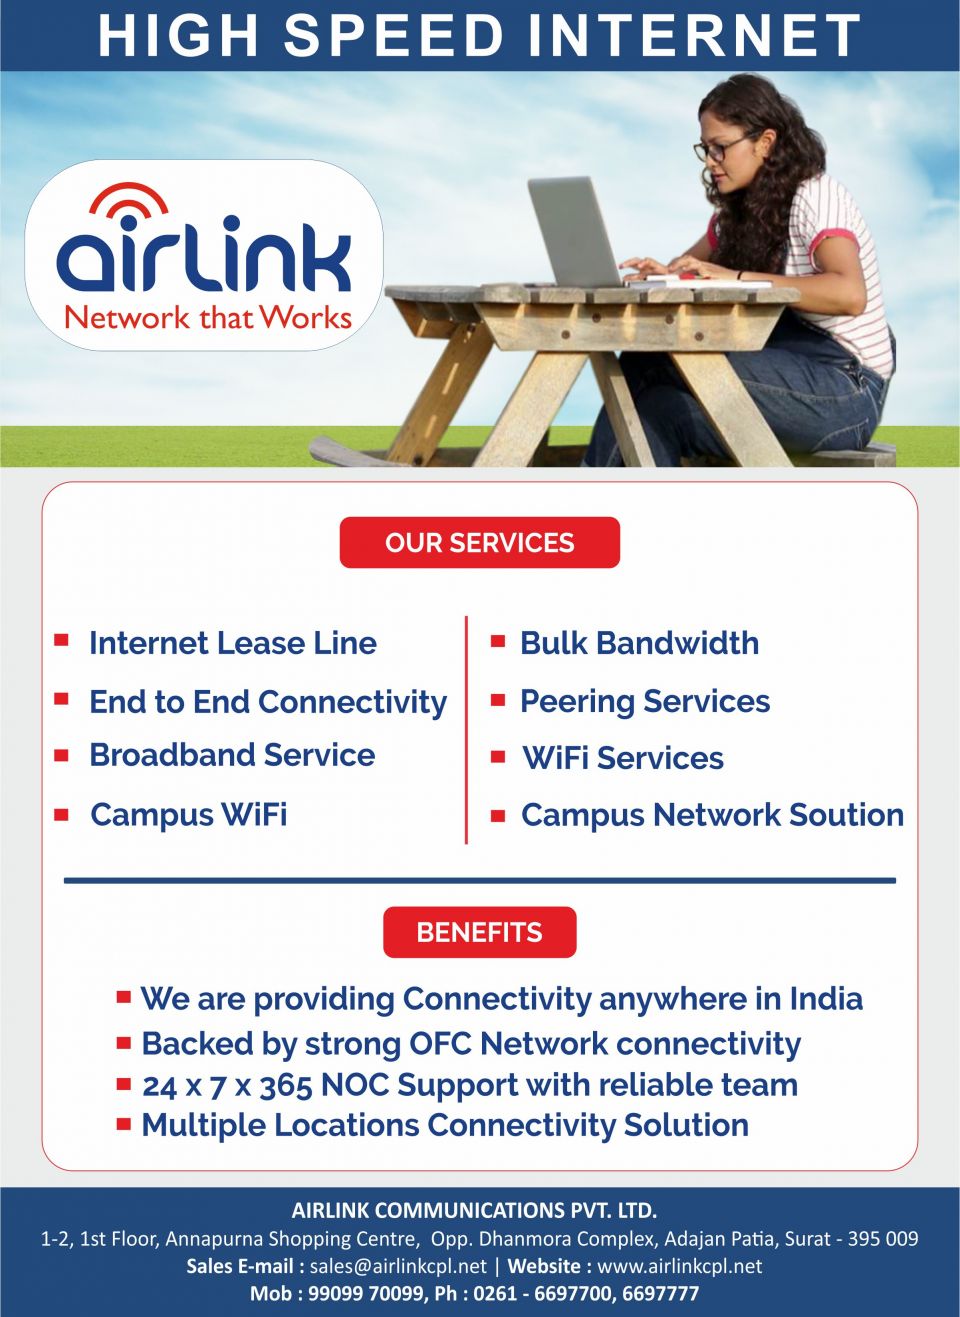 Airlink Communications Pvt Ltd